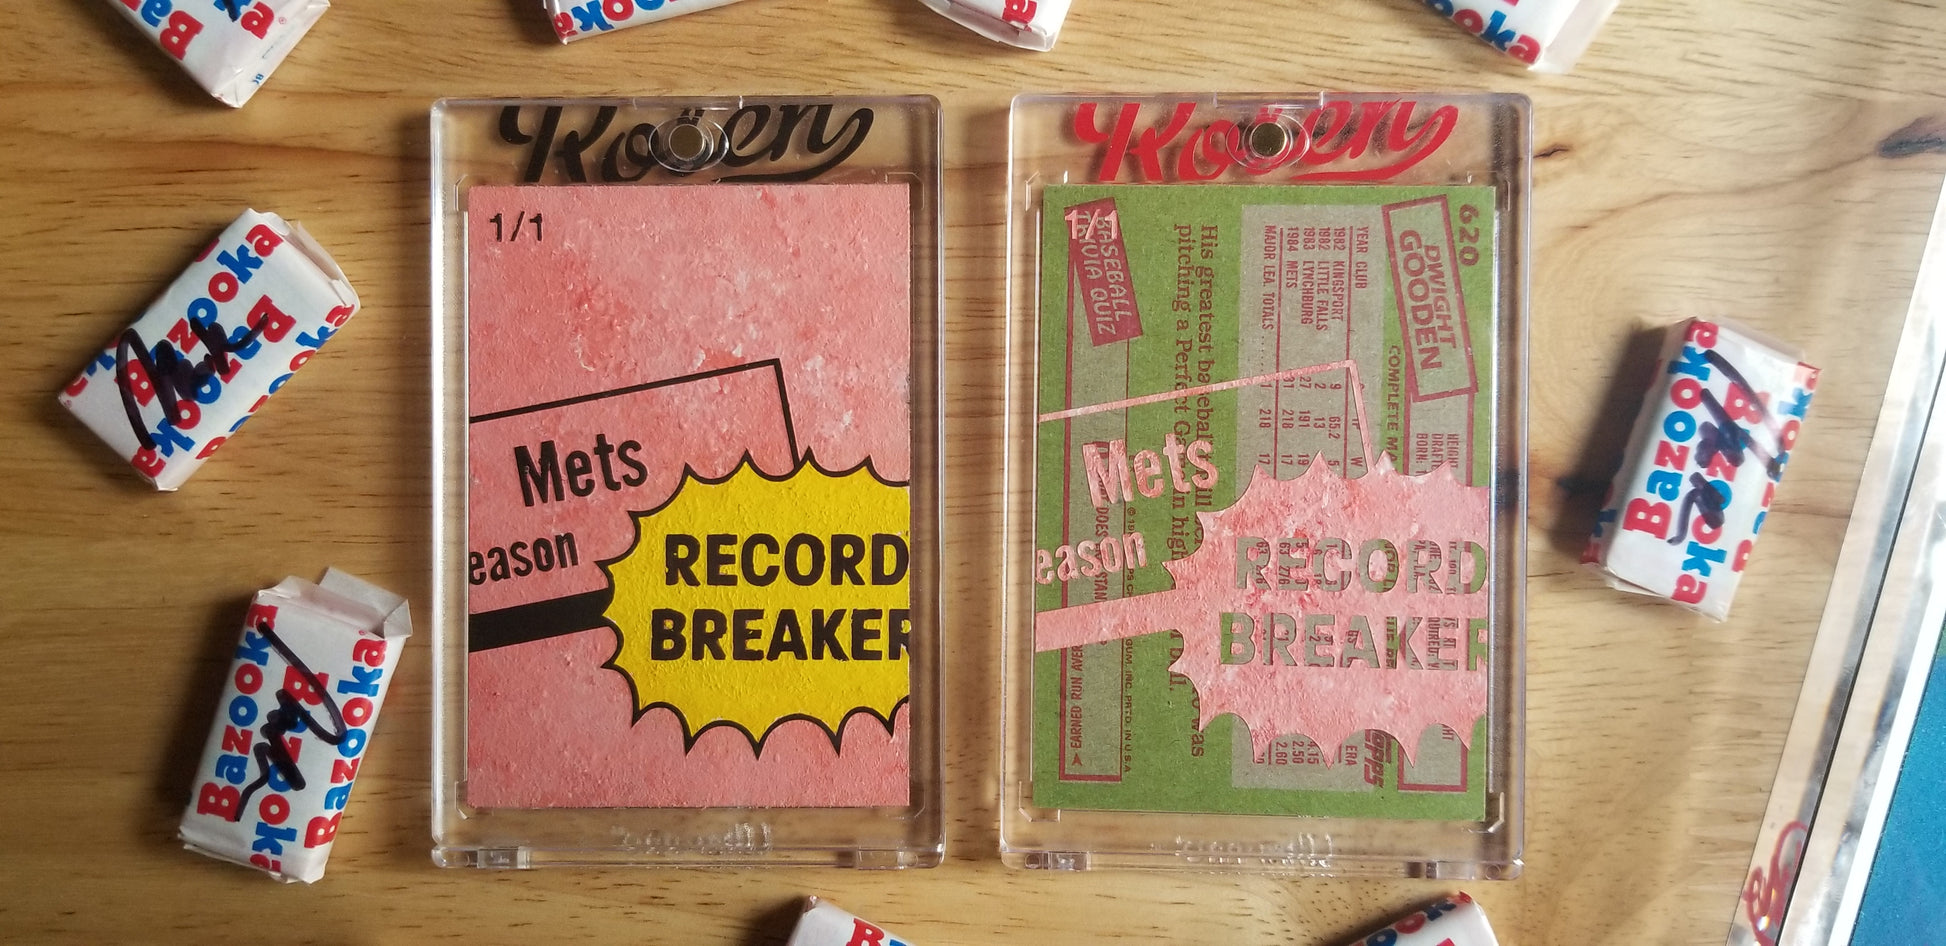 Baseball card art by Matthew Lee Rosen (aka Matthew Rosen) - Dwight Gooden Record Breaker